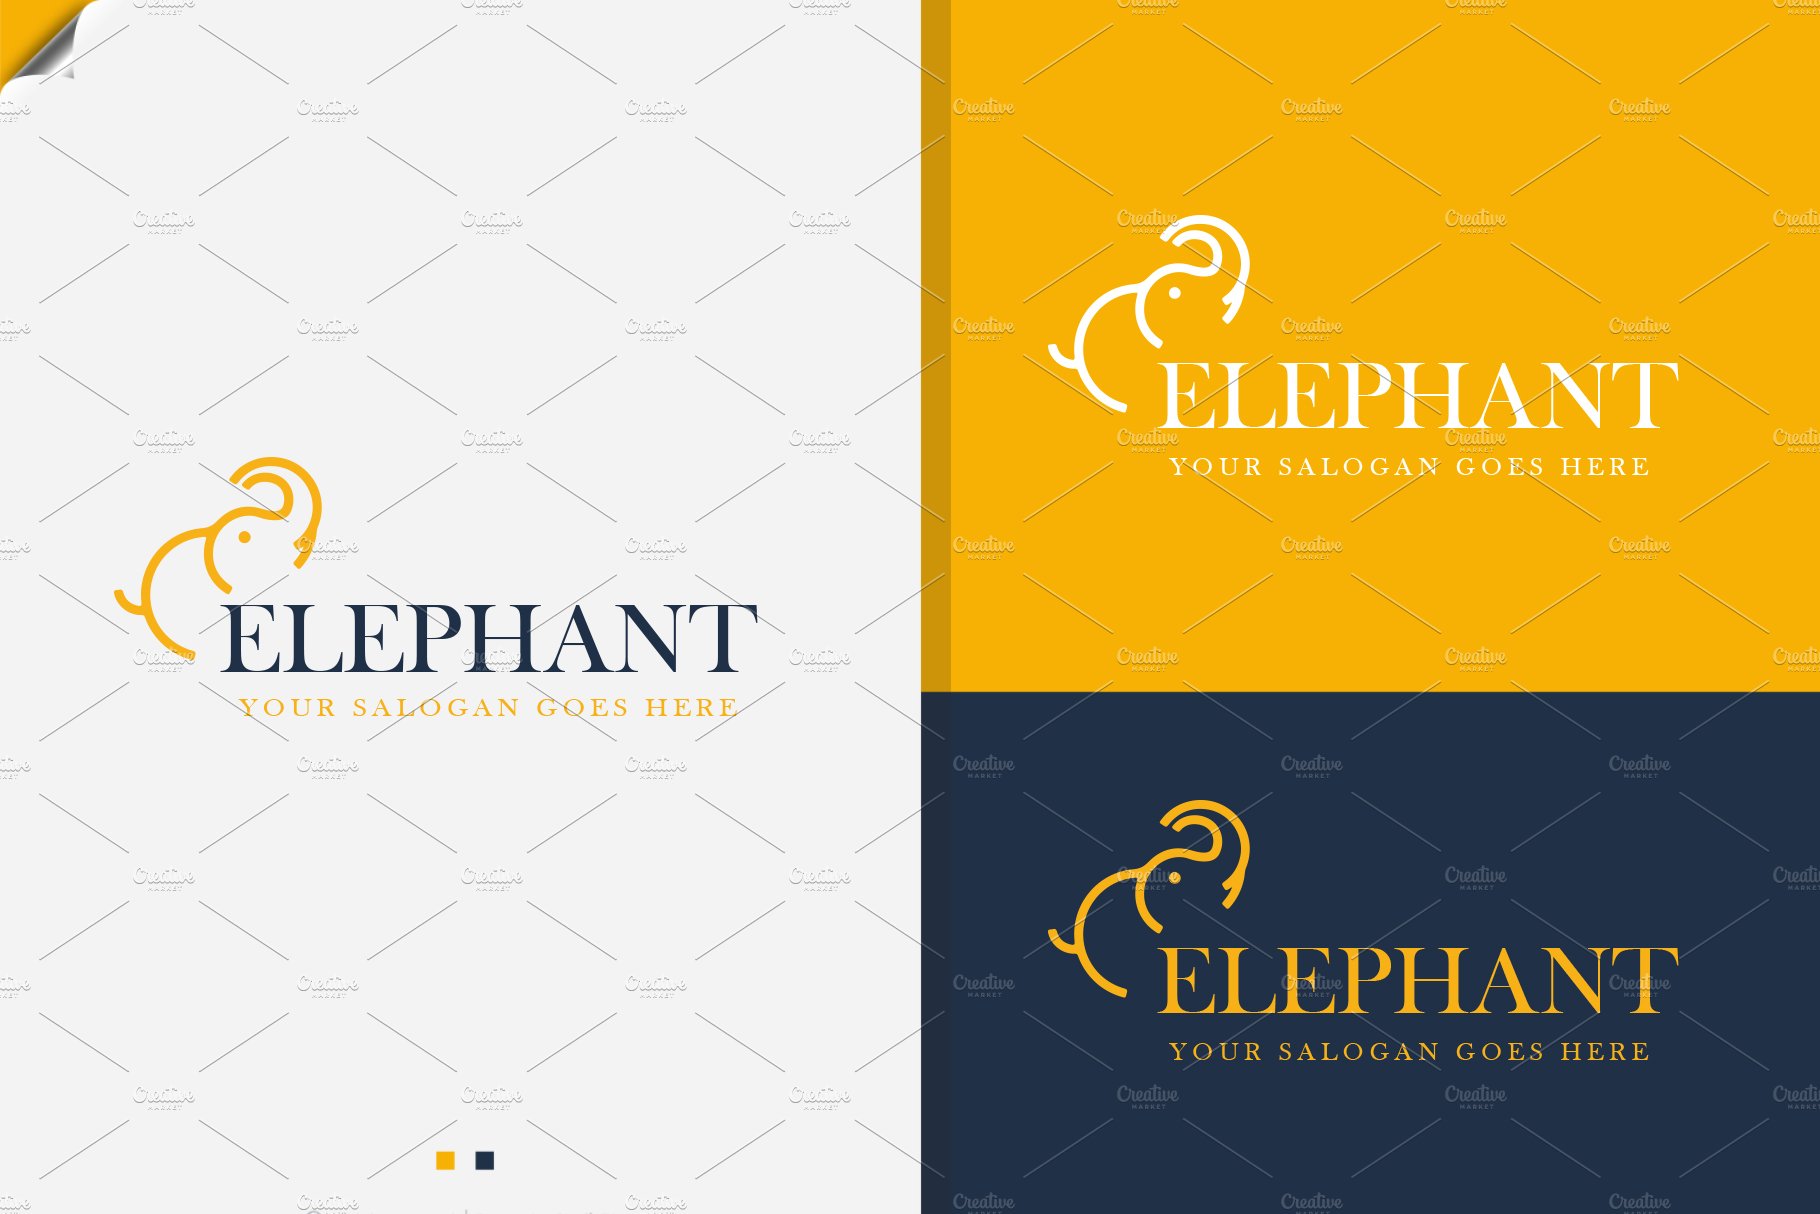 Elephant Logo 40% off cover image.